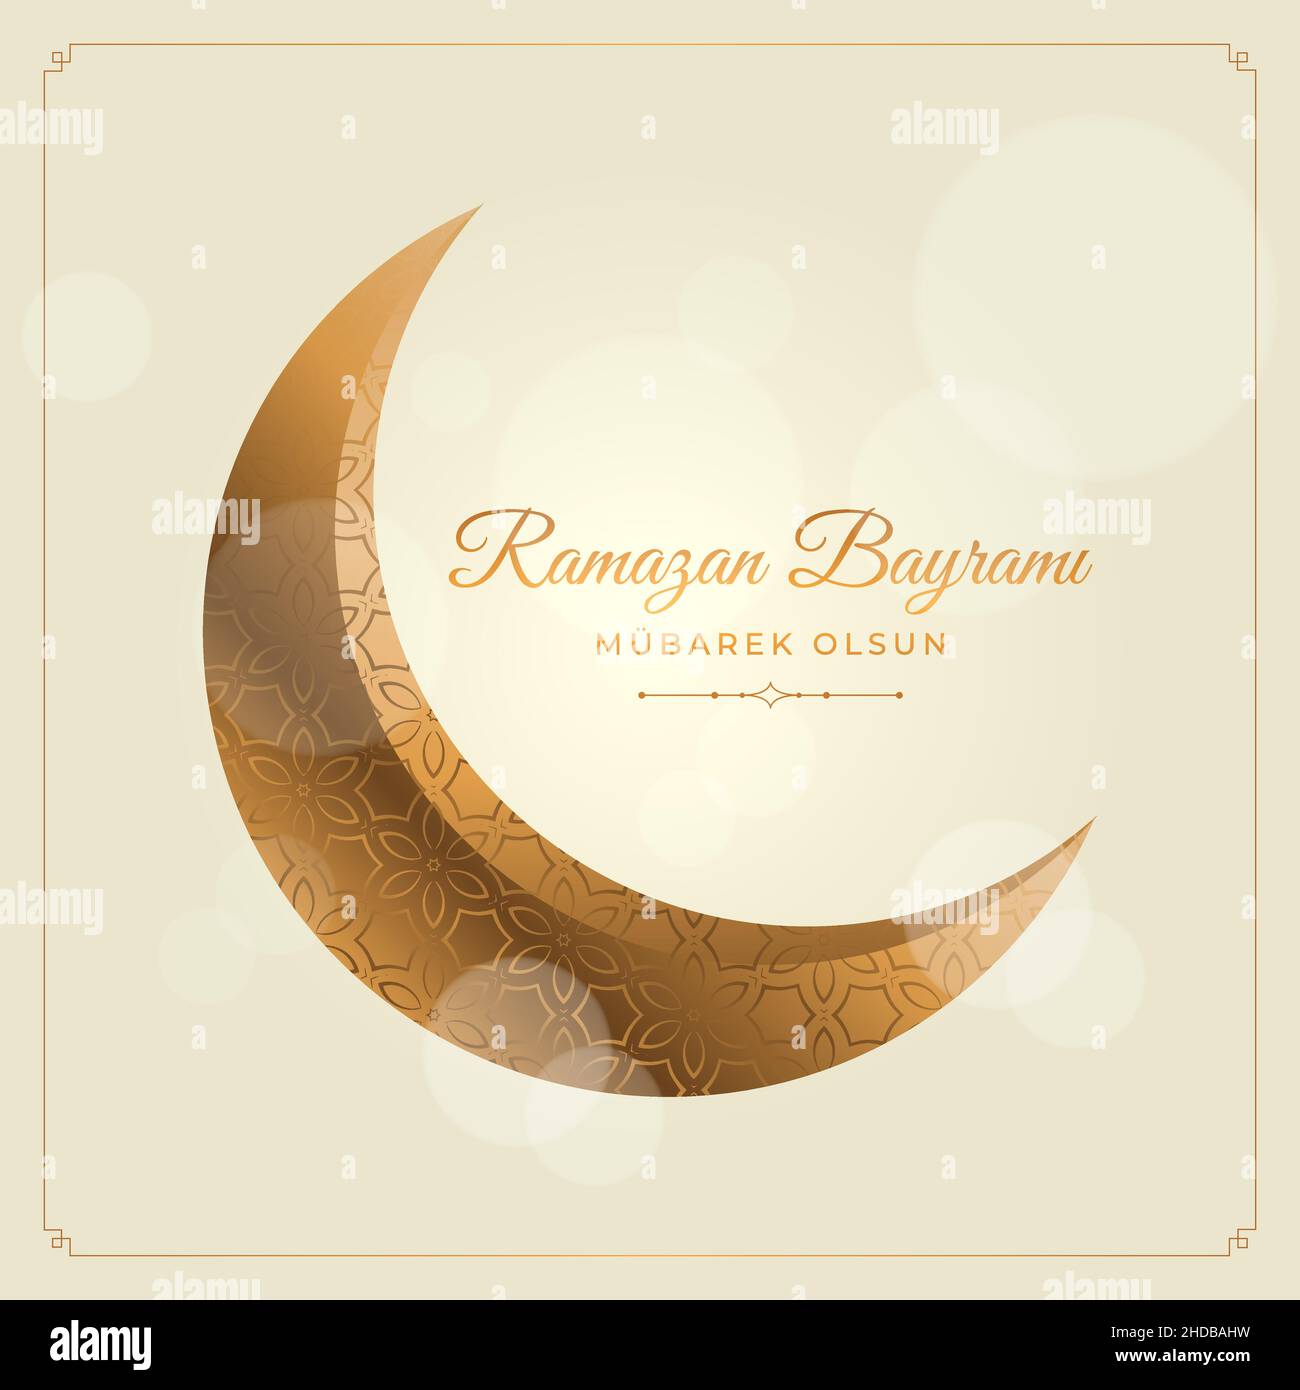 Ramazan Bayrami Mubarek Olsun. Translate: Eid Mubarak Ramadan. Stock Vector